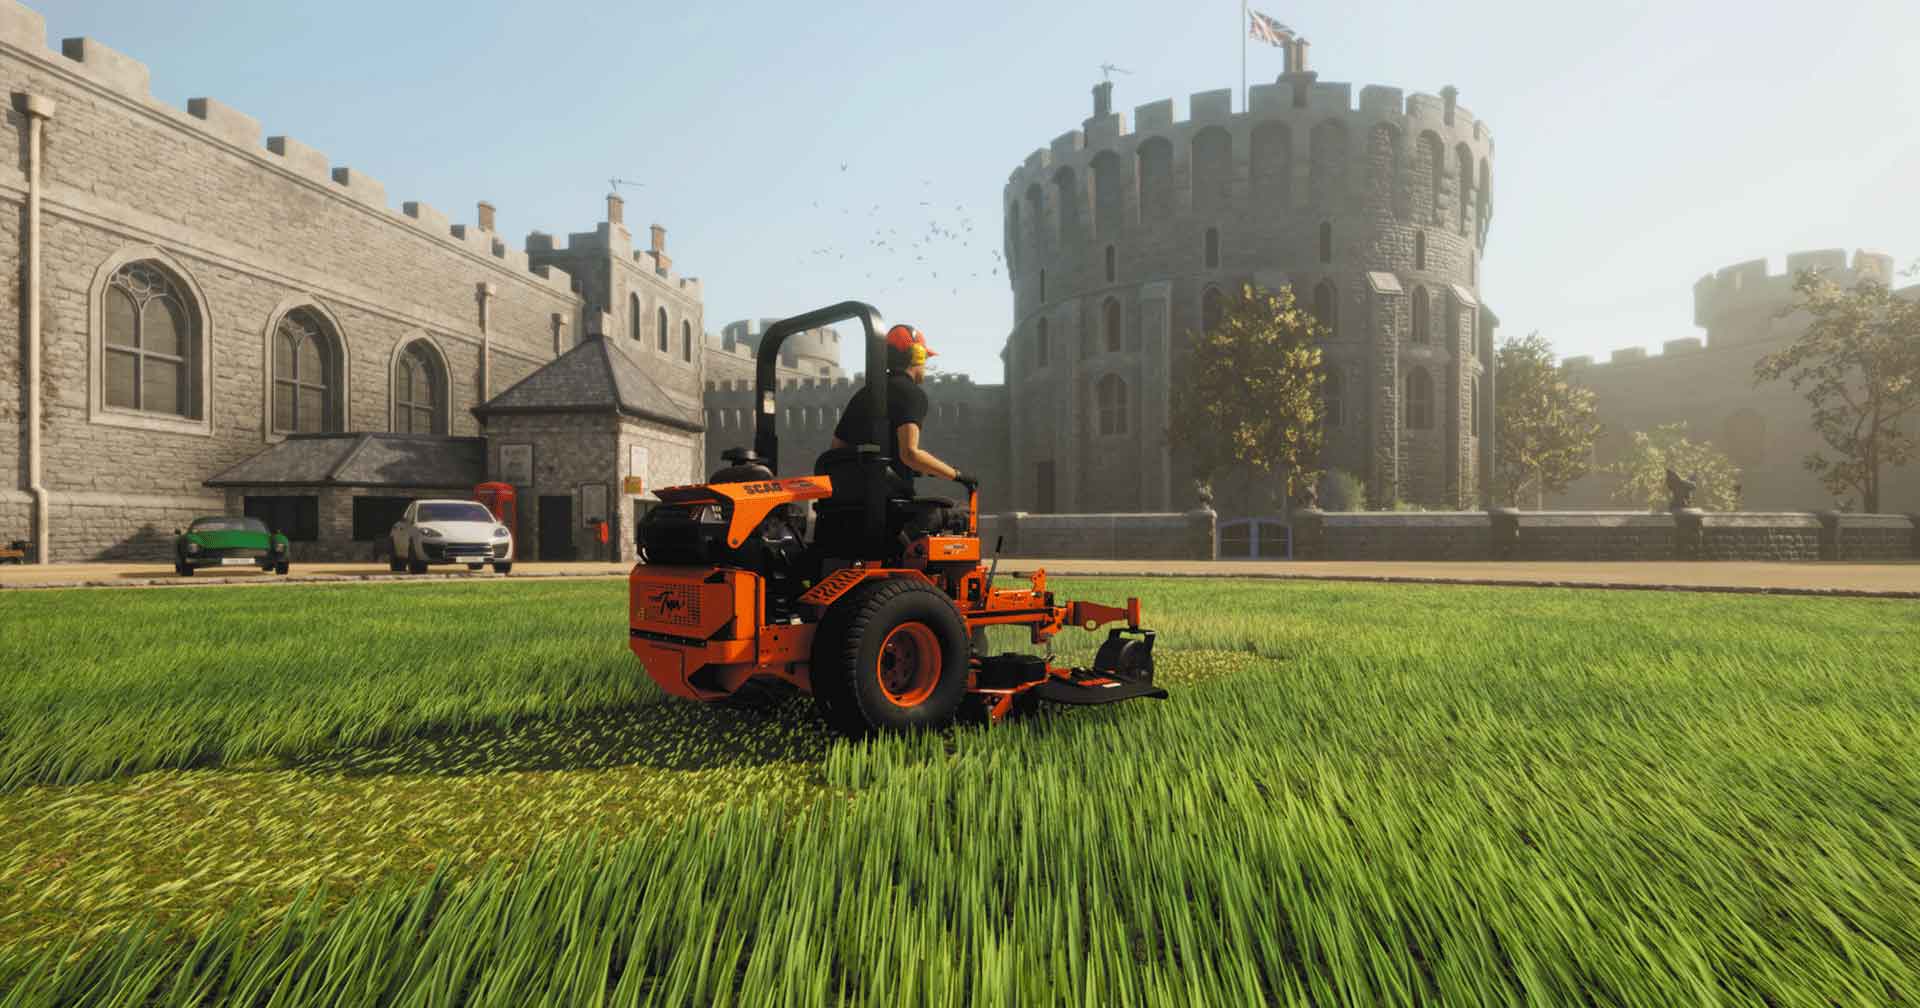 Lawn Mowing Simulator แจกฟรีบน Epic Games Store แล้ววันนี้